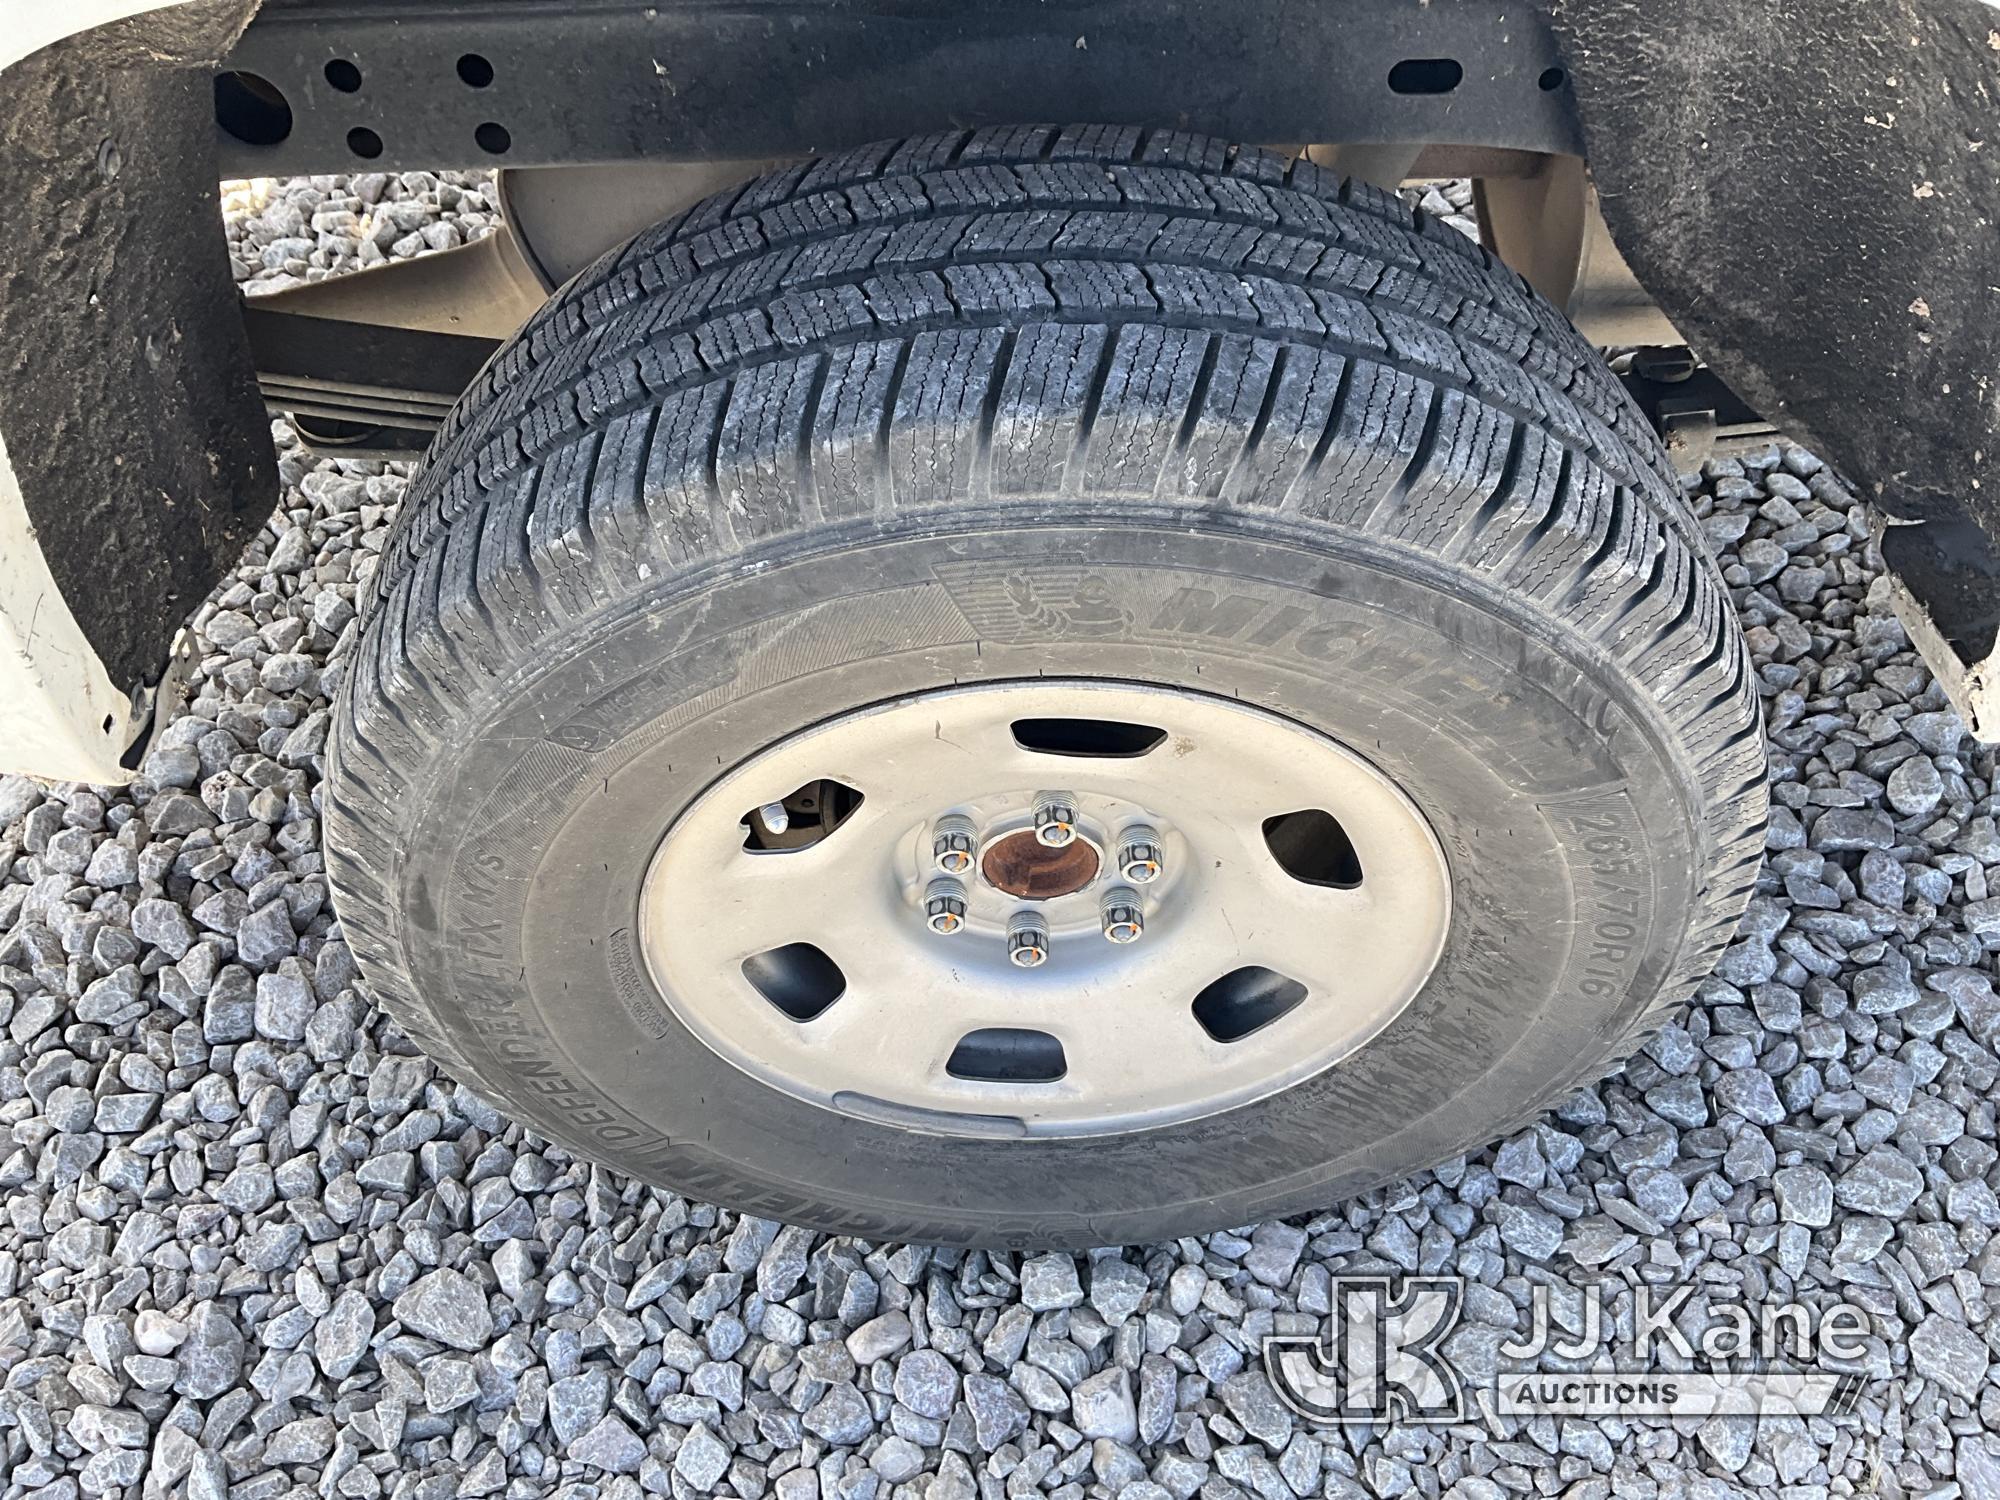 (El Paso, TX) 2016 Chevrolet Colorado 4x4 Extended-Cab Pickup Truck Runs & Moves) (Paint Damage, Spa